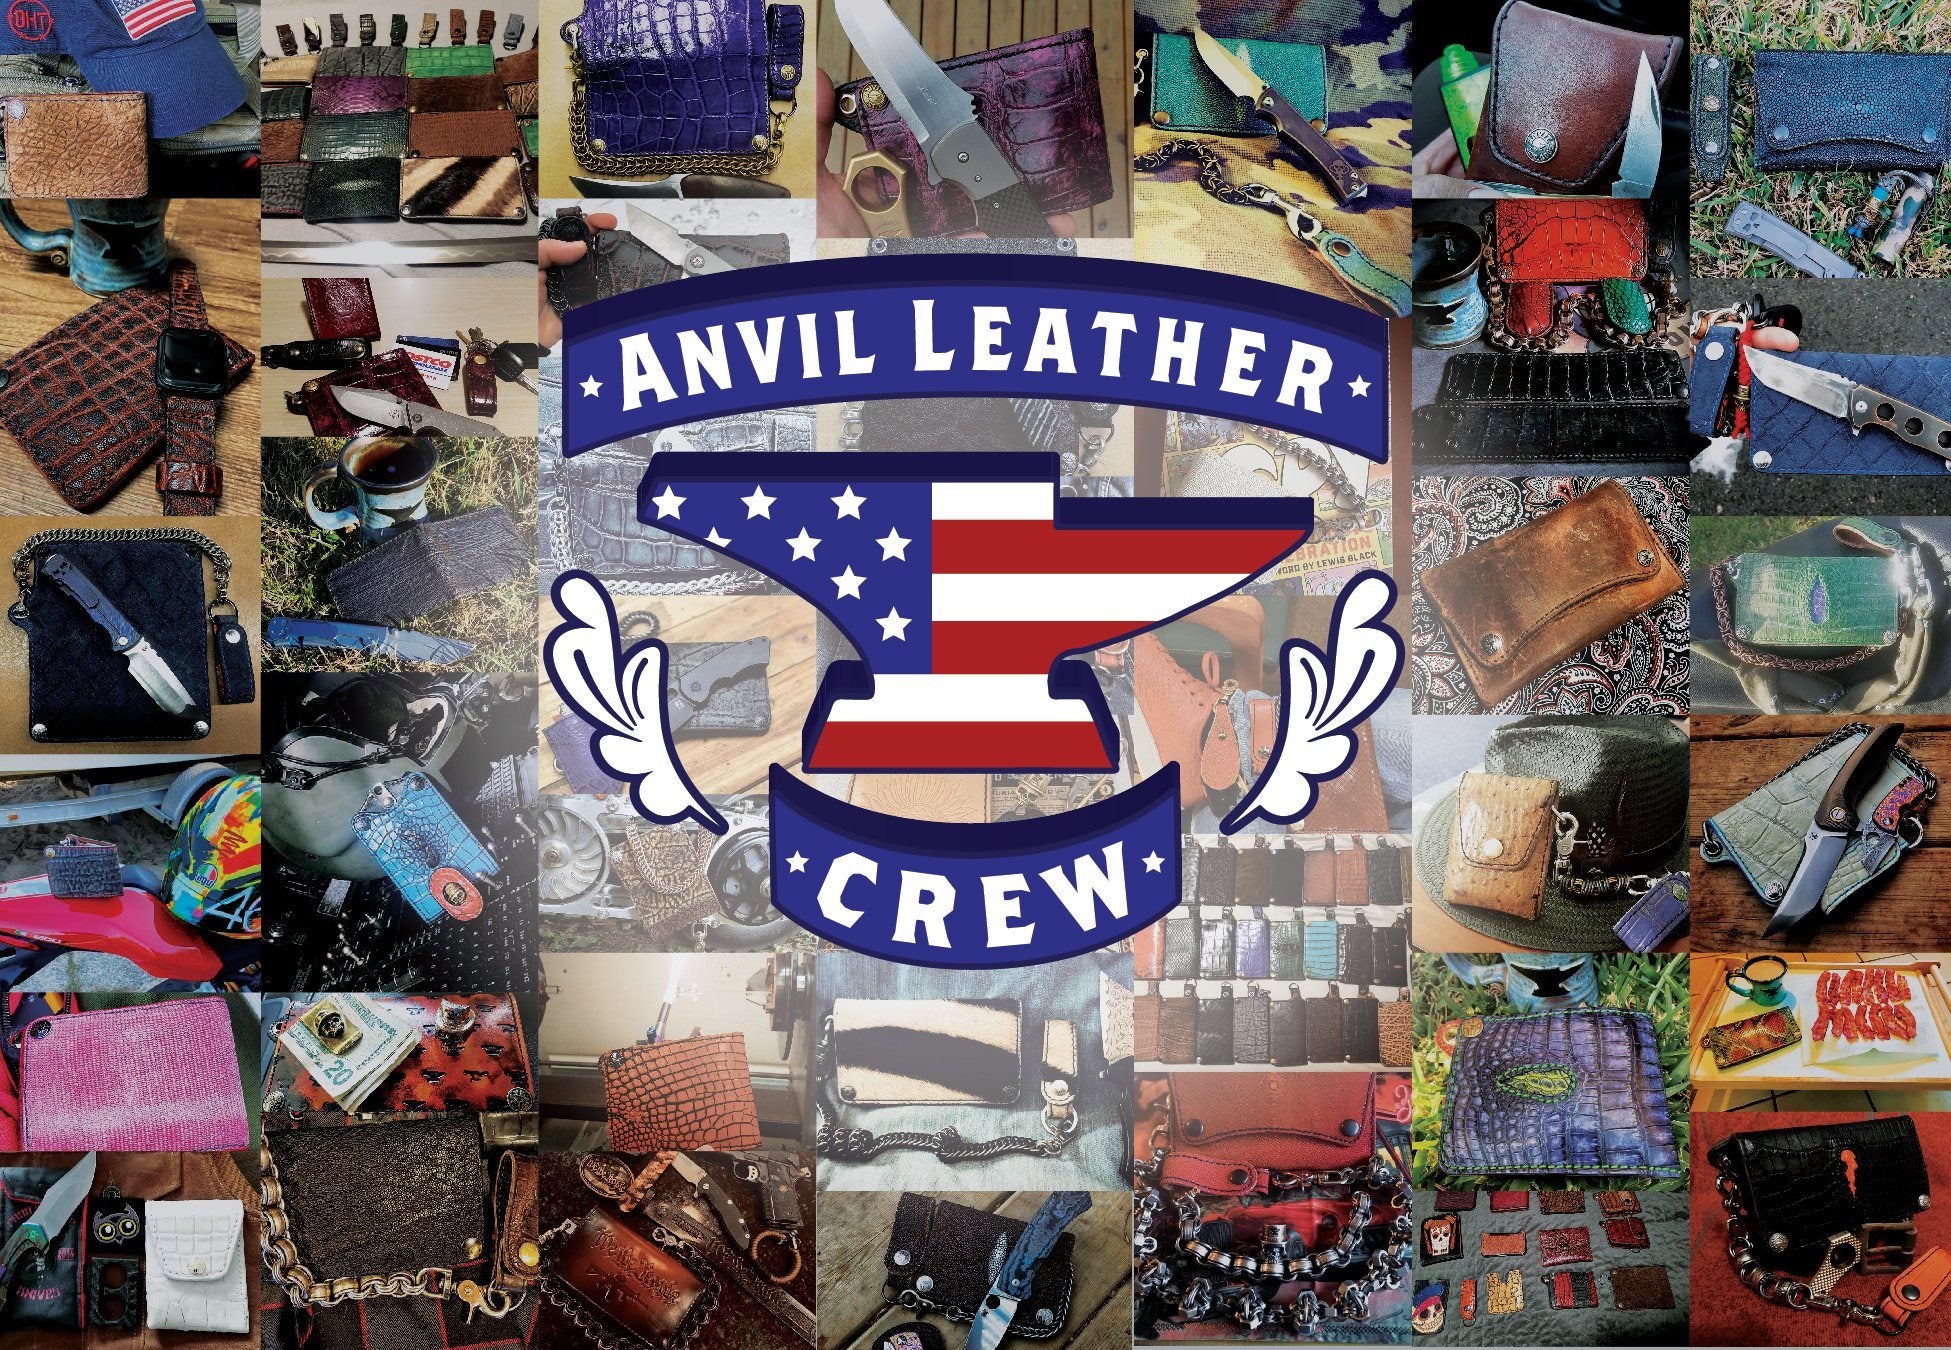 The Anvil Leather Crew aka "The Crew"